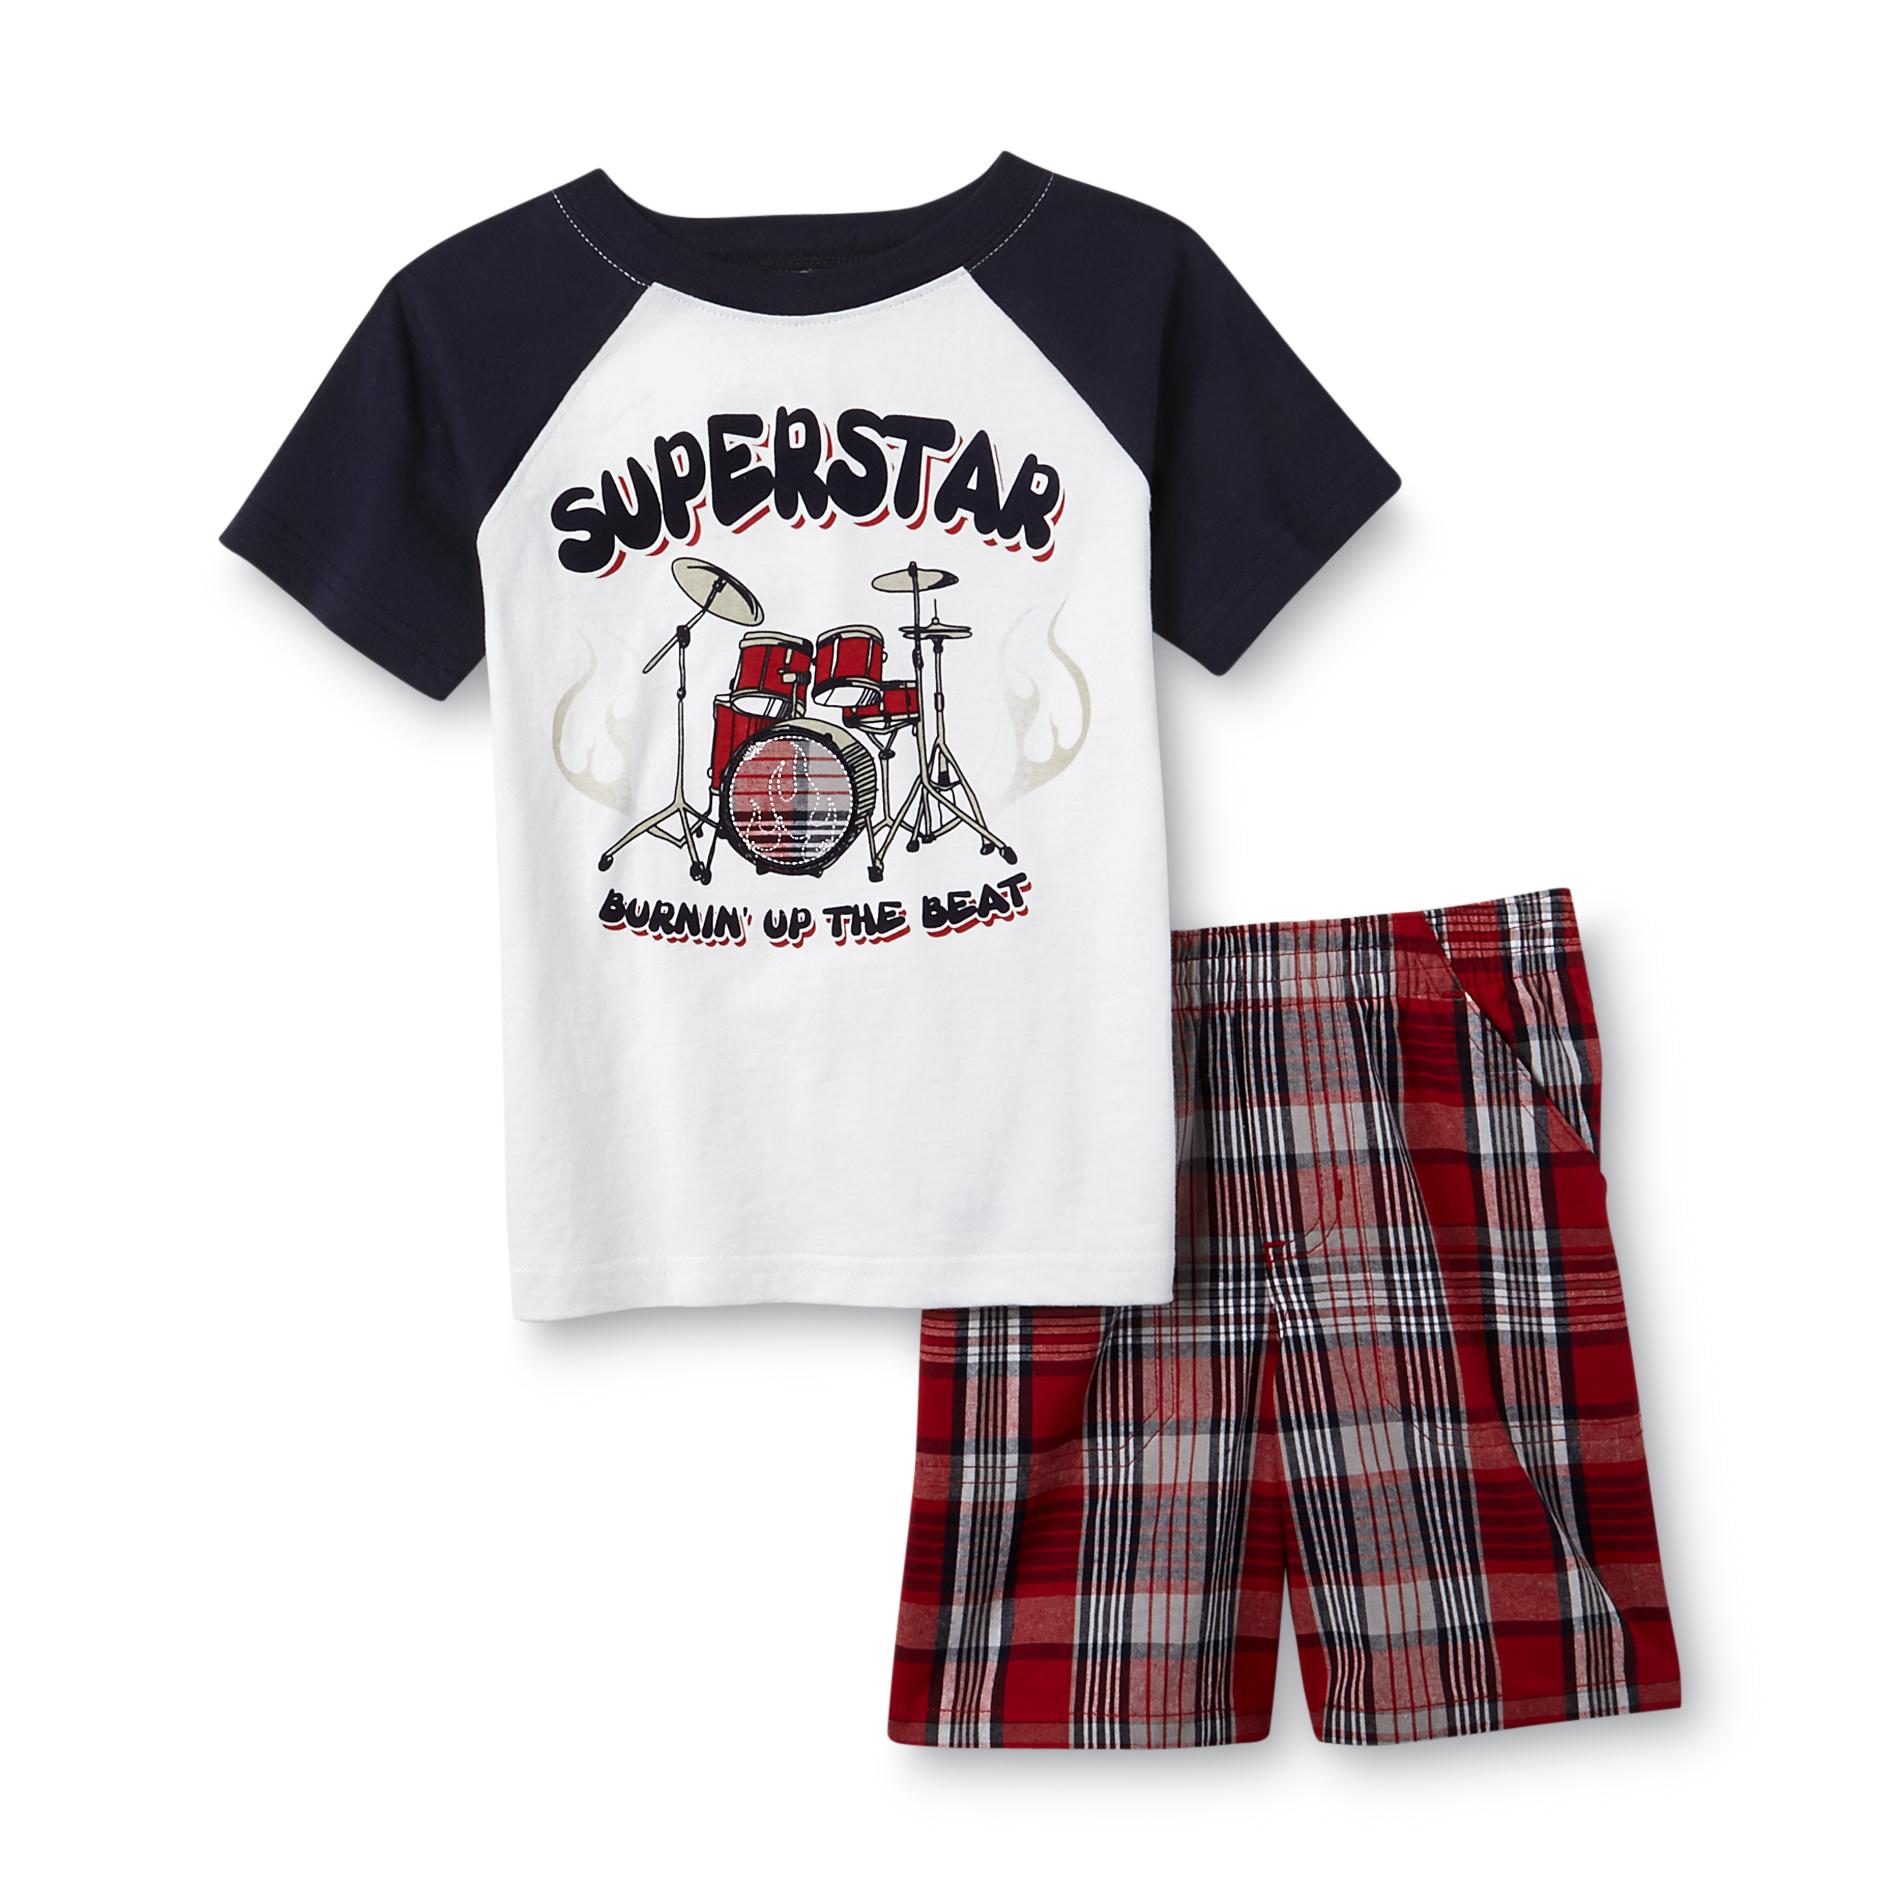 Toughskins Infant & Toddler Boy's T-Shirt & Shorts - Rock 'n' Roll Superstar